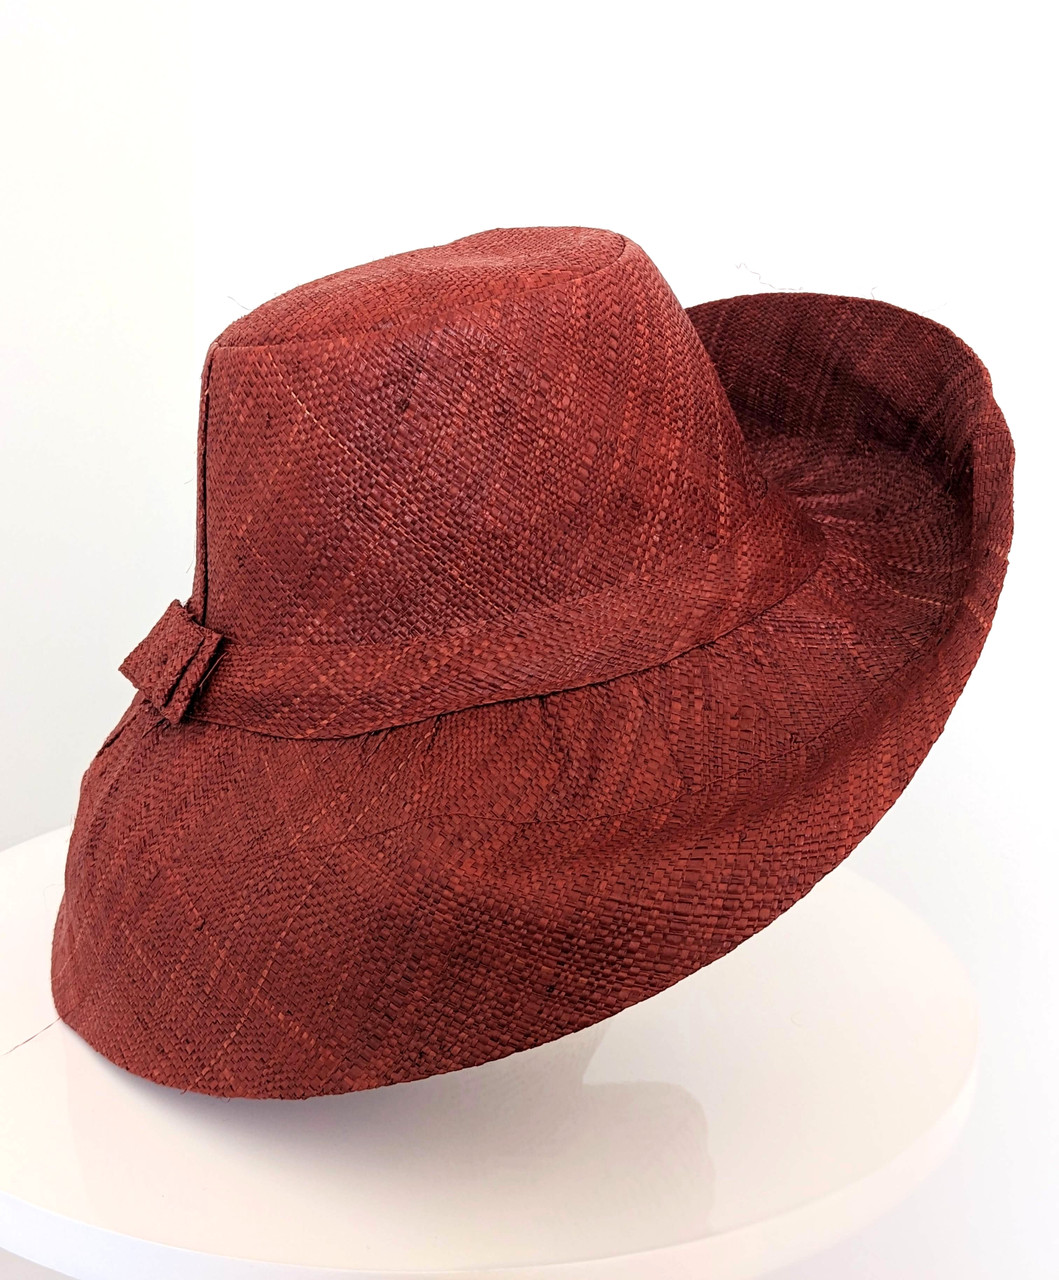 Raffia Straw Lightweight Breathable Stripes Sun Hat, Made in